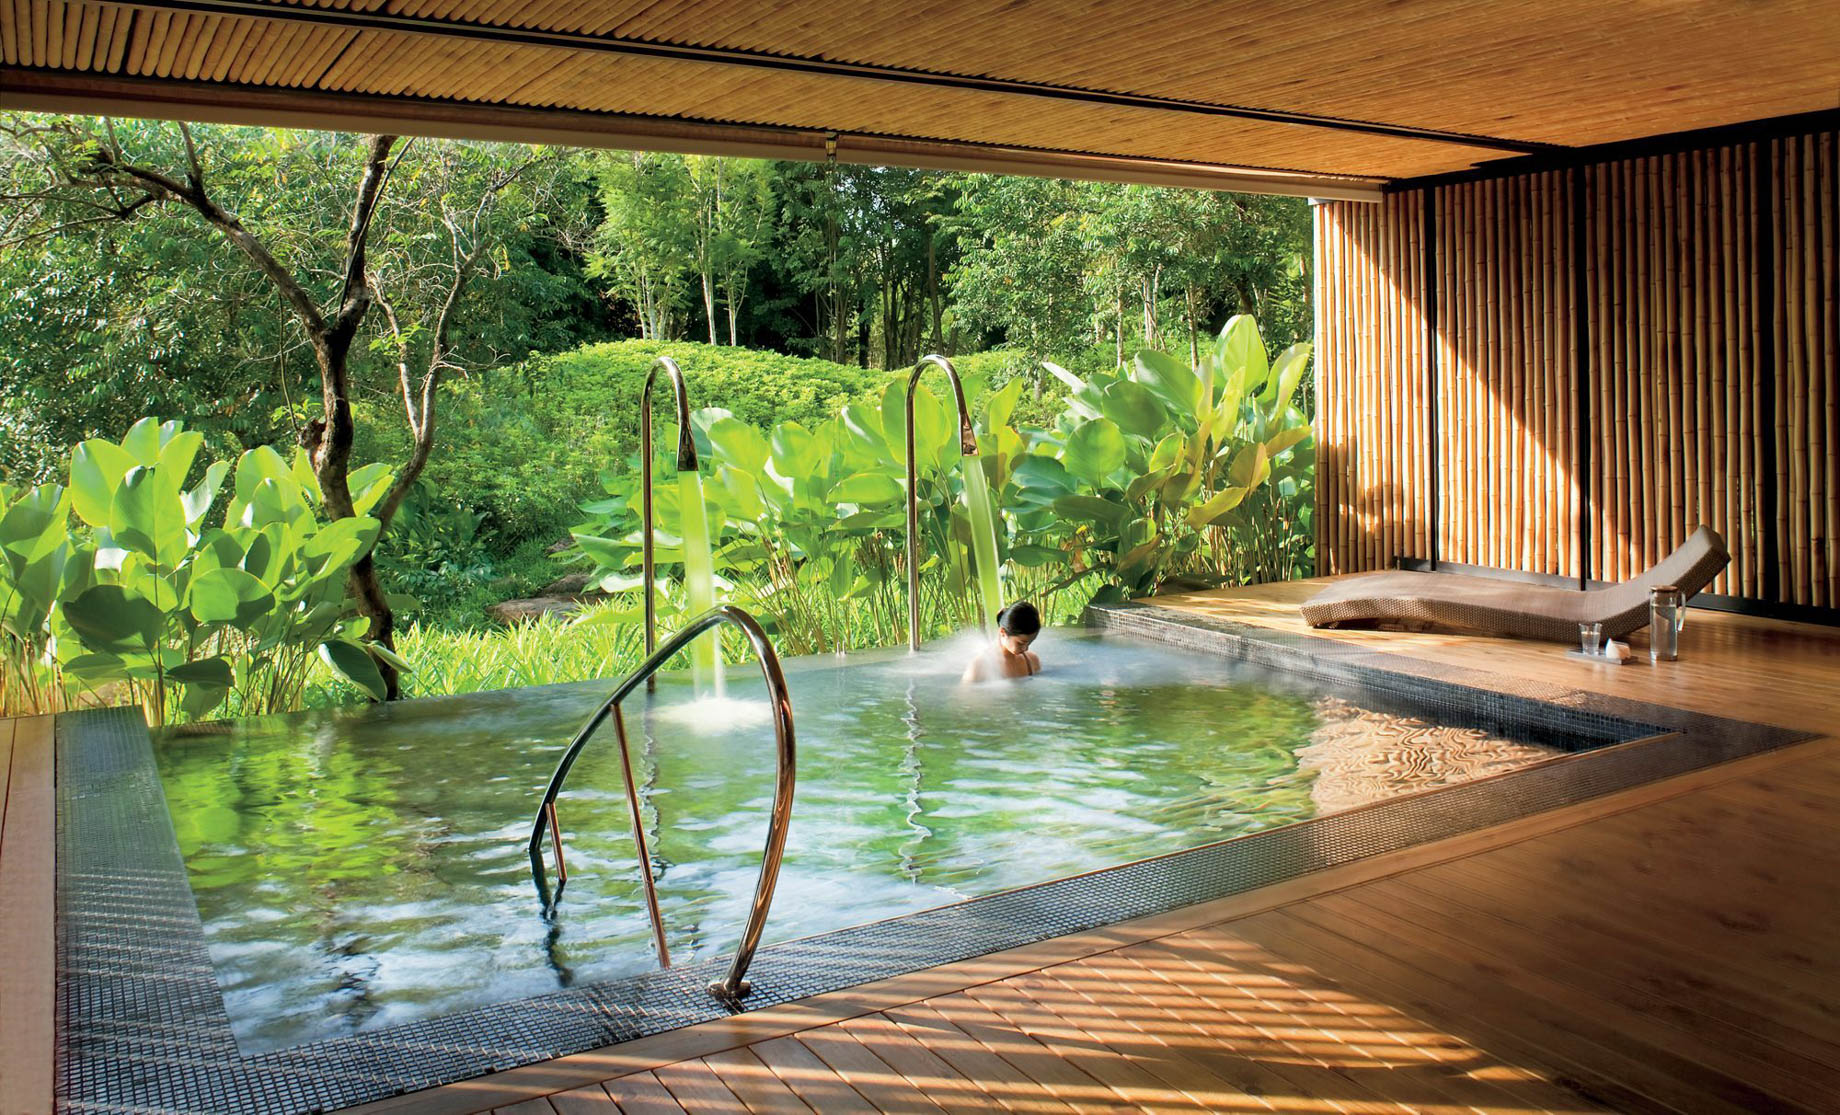 The Ritz-Carlton, Phulay Bay Reserve Resort - Muang Krabi, Thailand - Spa Vitality Pool